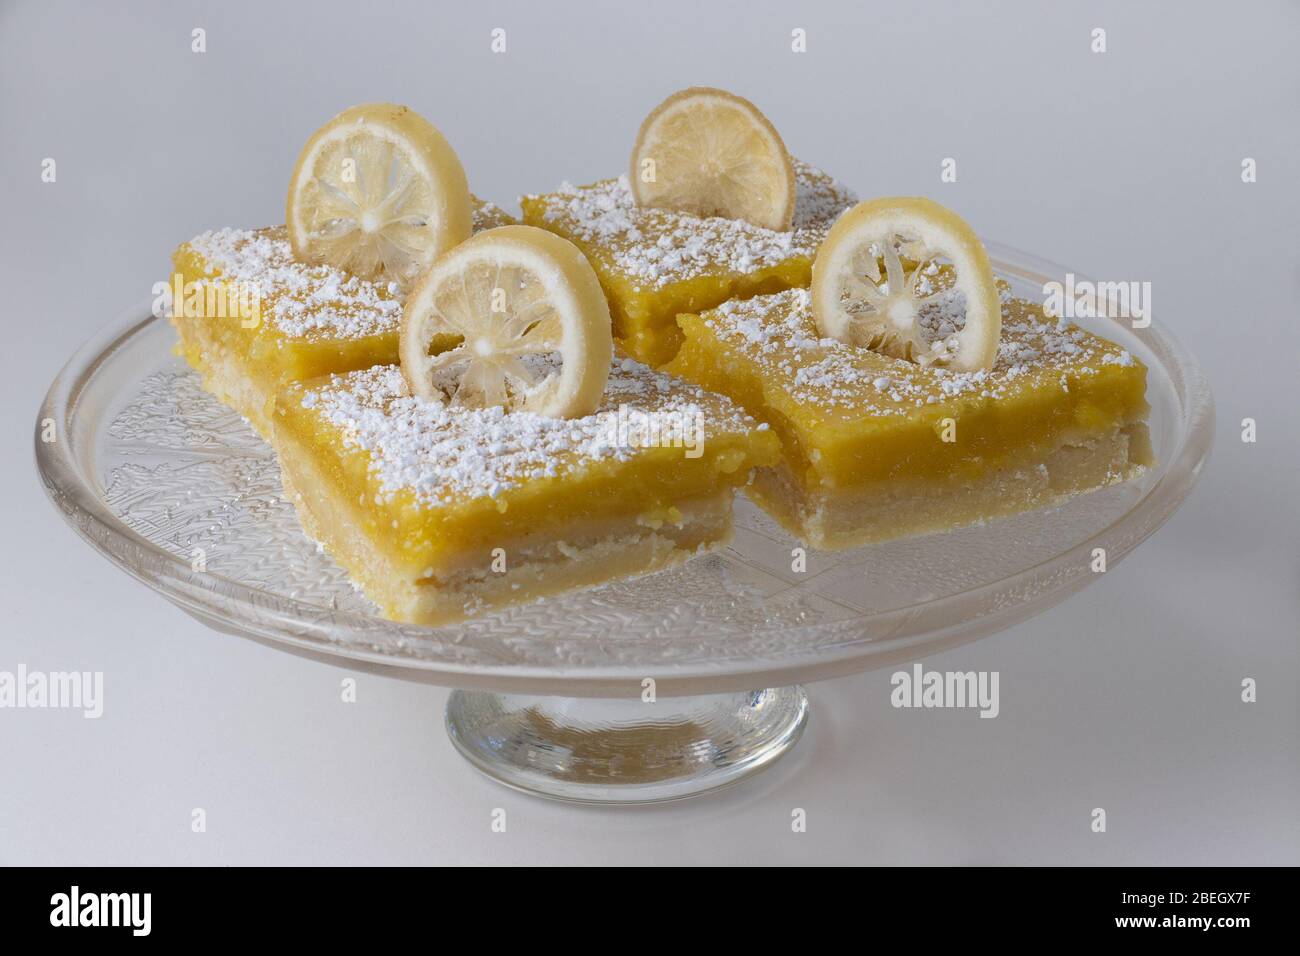 Homemade baked lemon bars topped with sliced lemons and powdered sugar Stock Photo